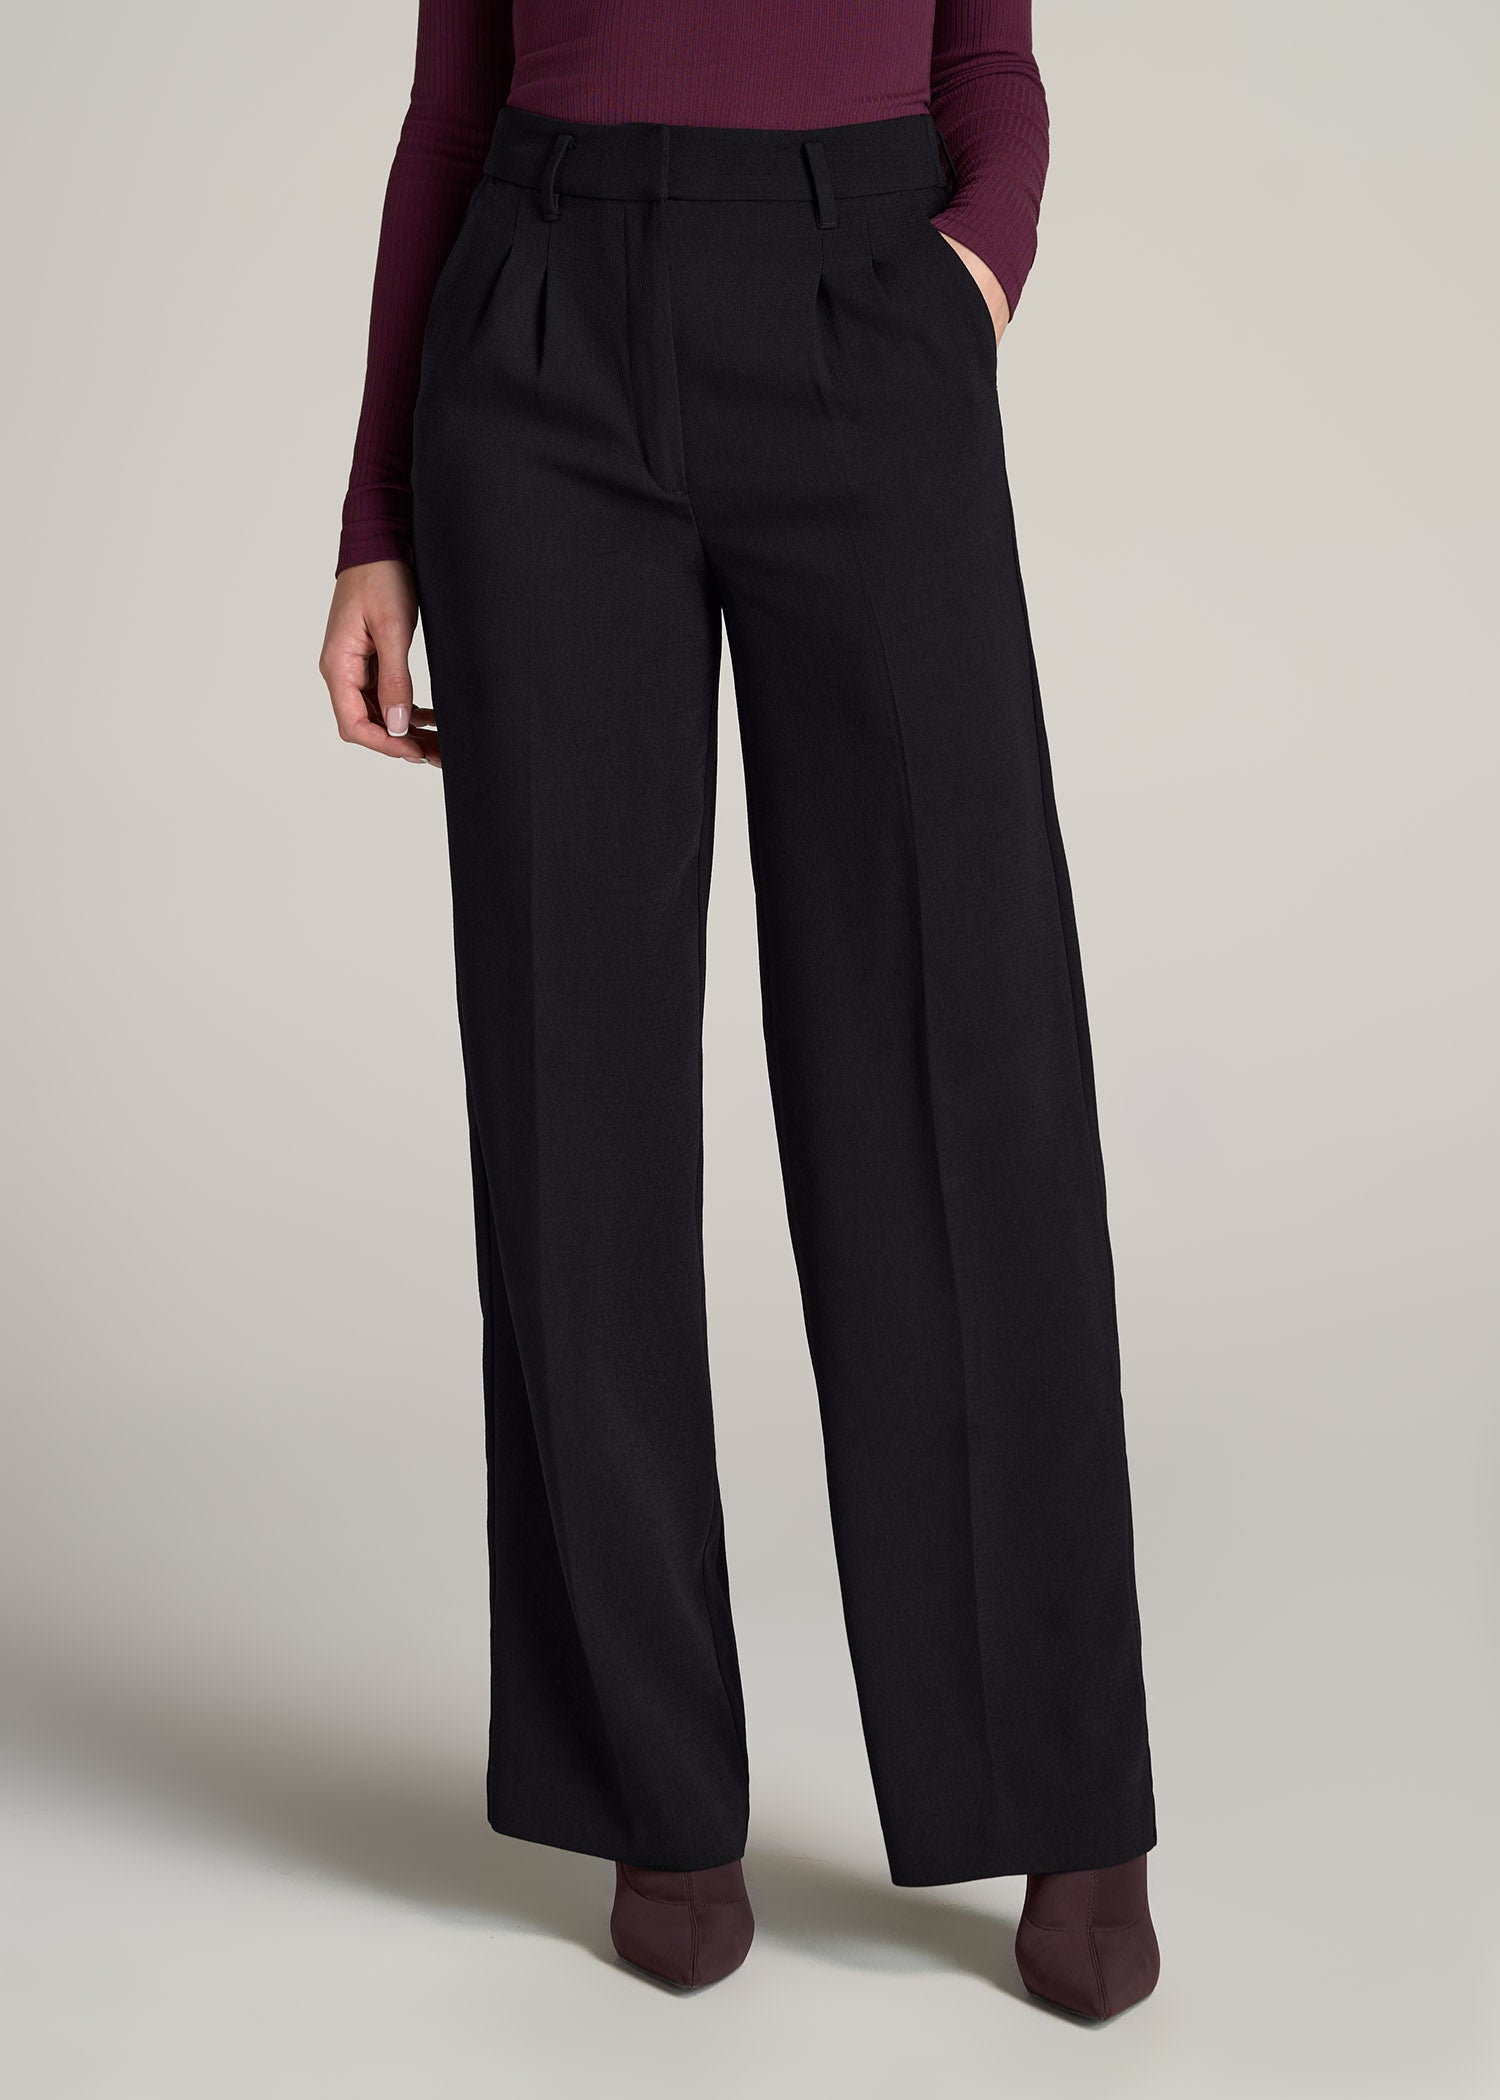 https://cdn.shopify.com/s/files/1/1008/6090/products/American-Tall-Women-Pleated-Dress-Pants-Black-front.jpg?v=1666363783